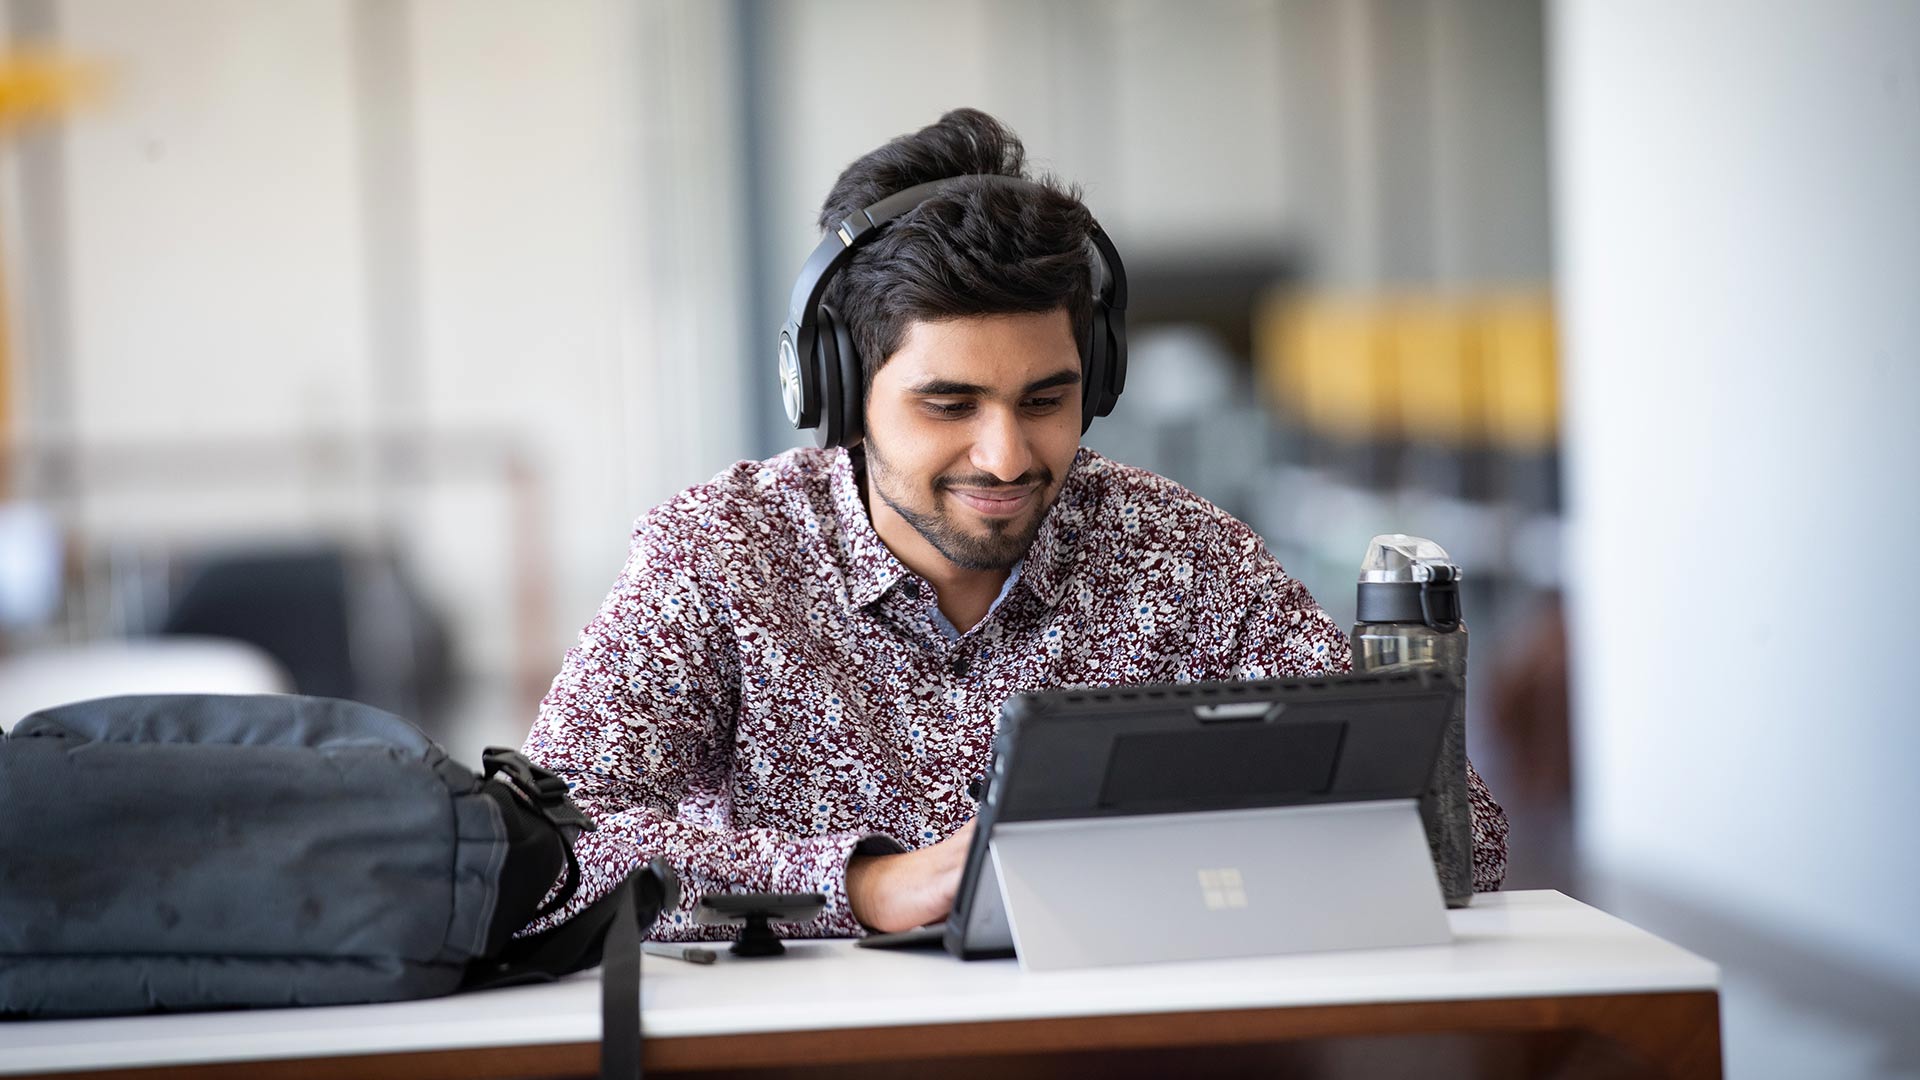 Man wearing headphones using a tablet computer